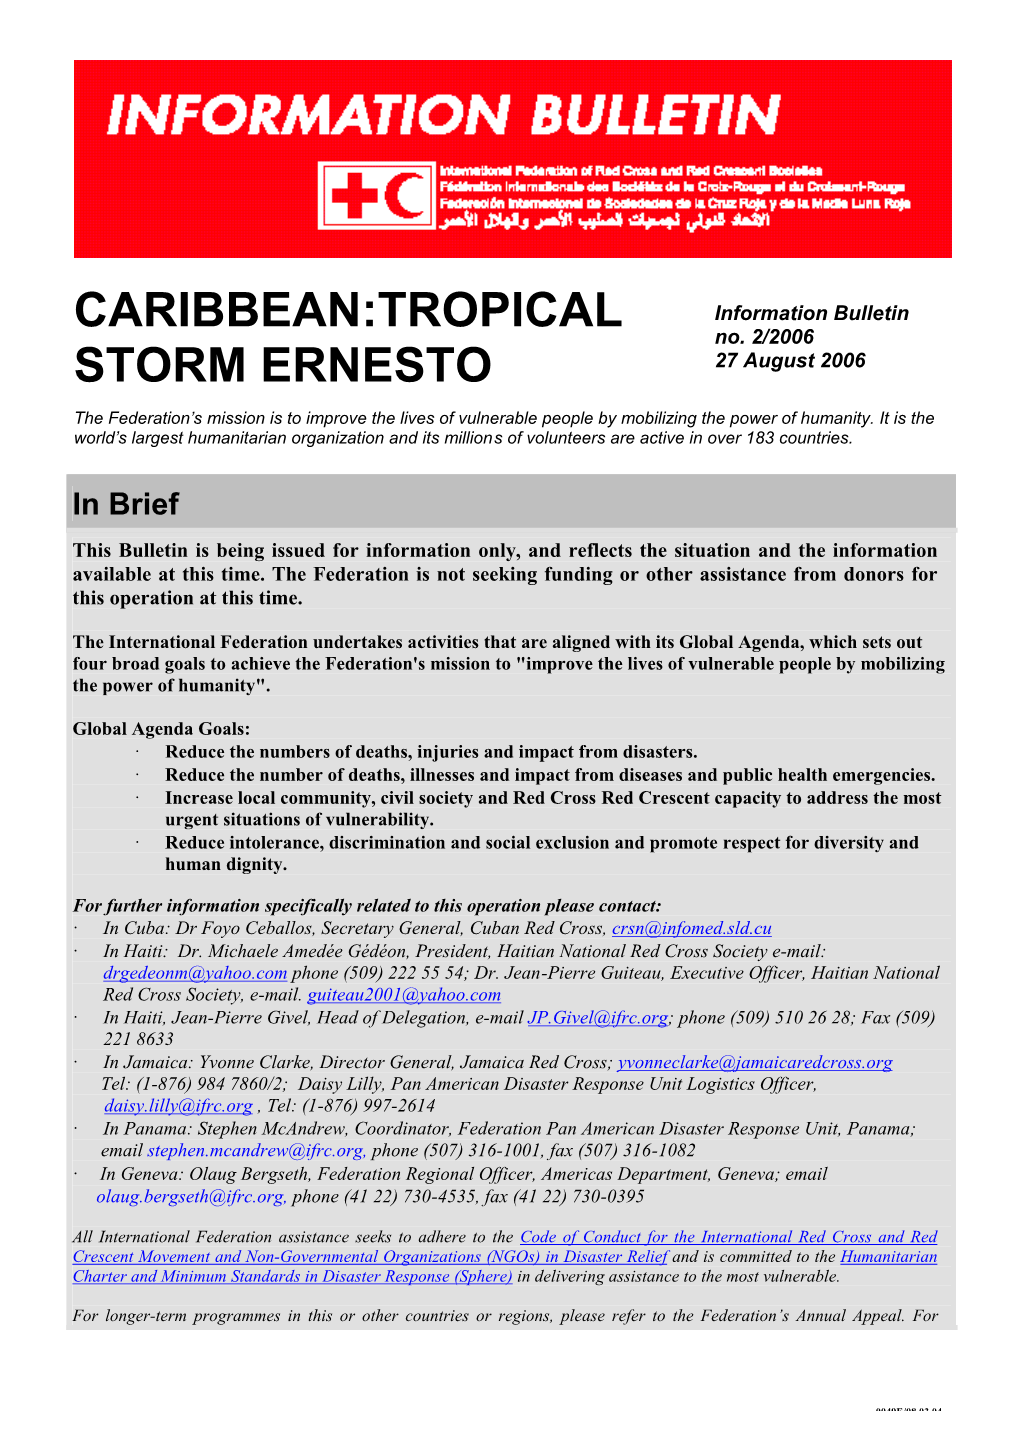 Caribbean:Tropical Storm Ernesto